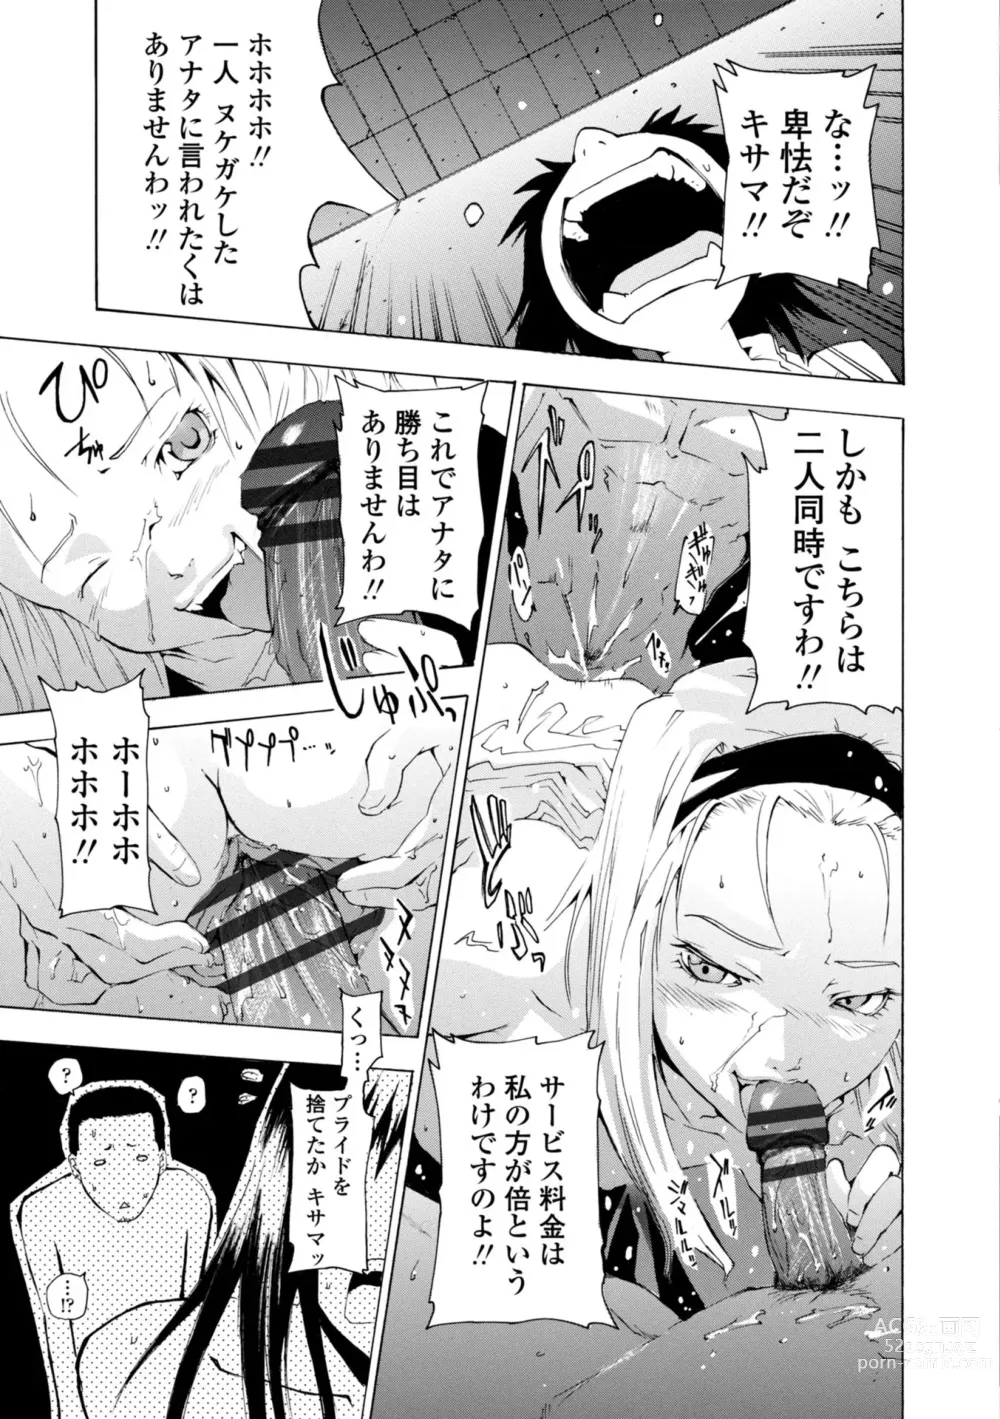 Page 17 of manga Houga Ge